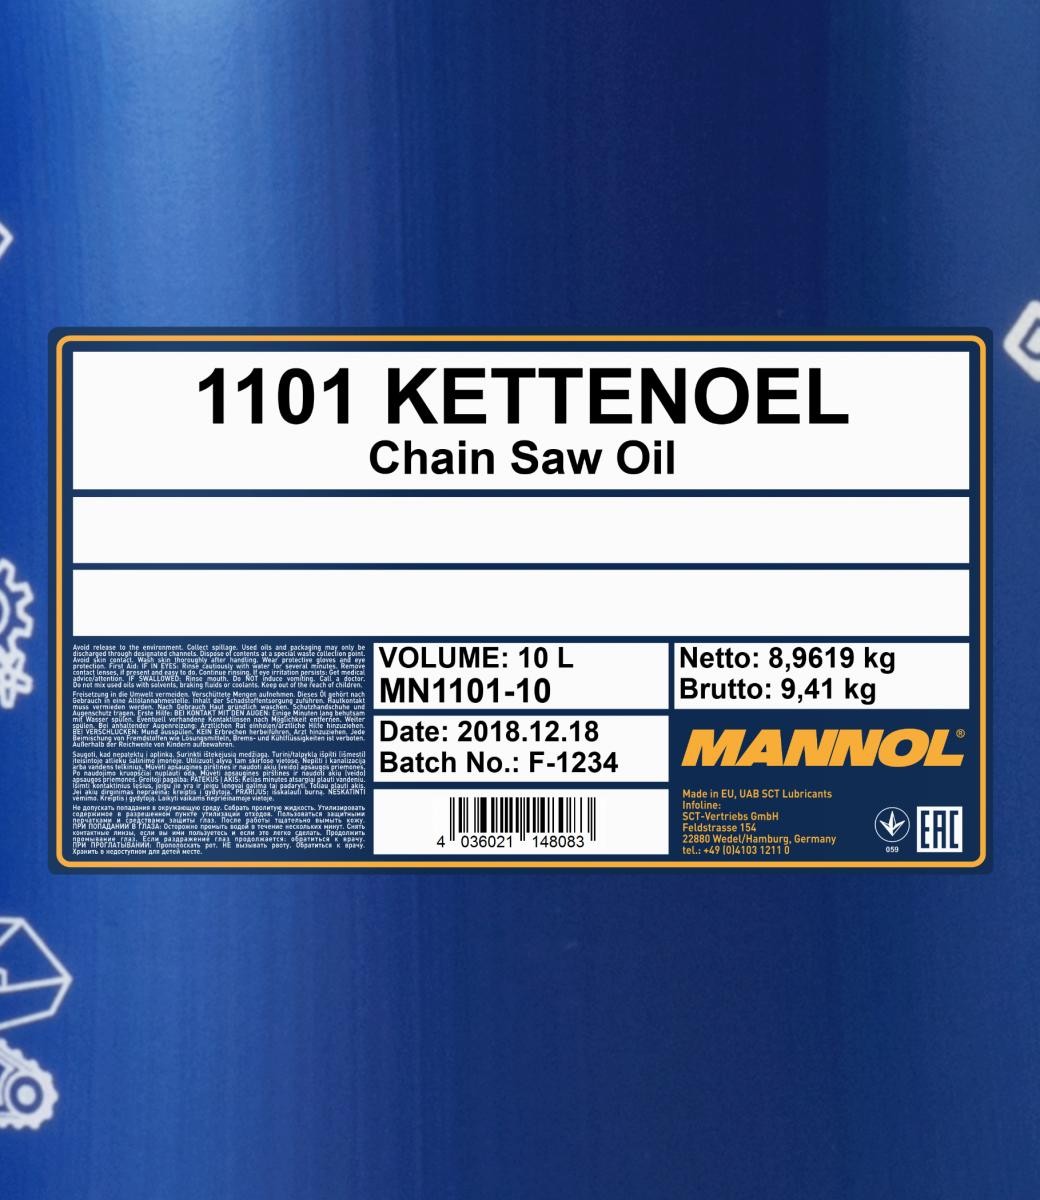 Mannol 1101 Kettenöl Sägekettenöl 10 Liter